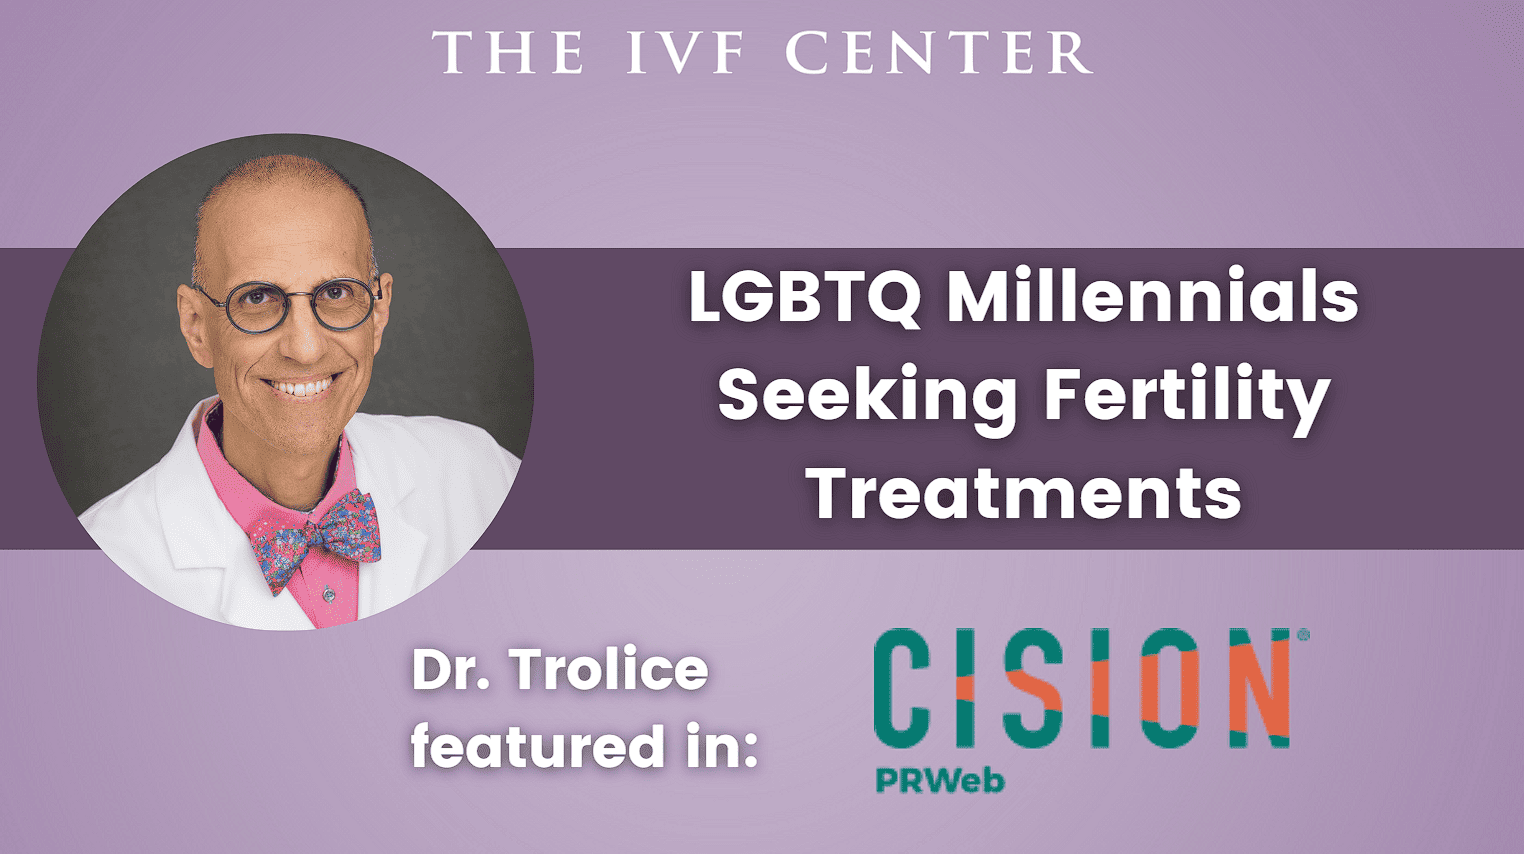 Dr Trolice featured in: Cision - PR Web - Millennials Seeking Fertility Treatments